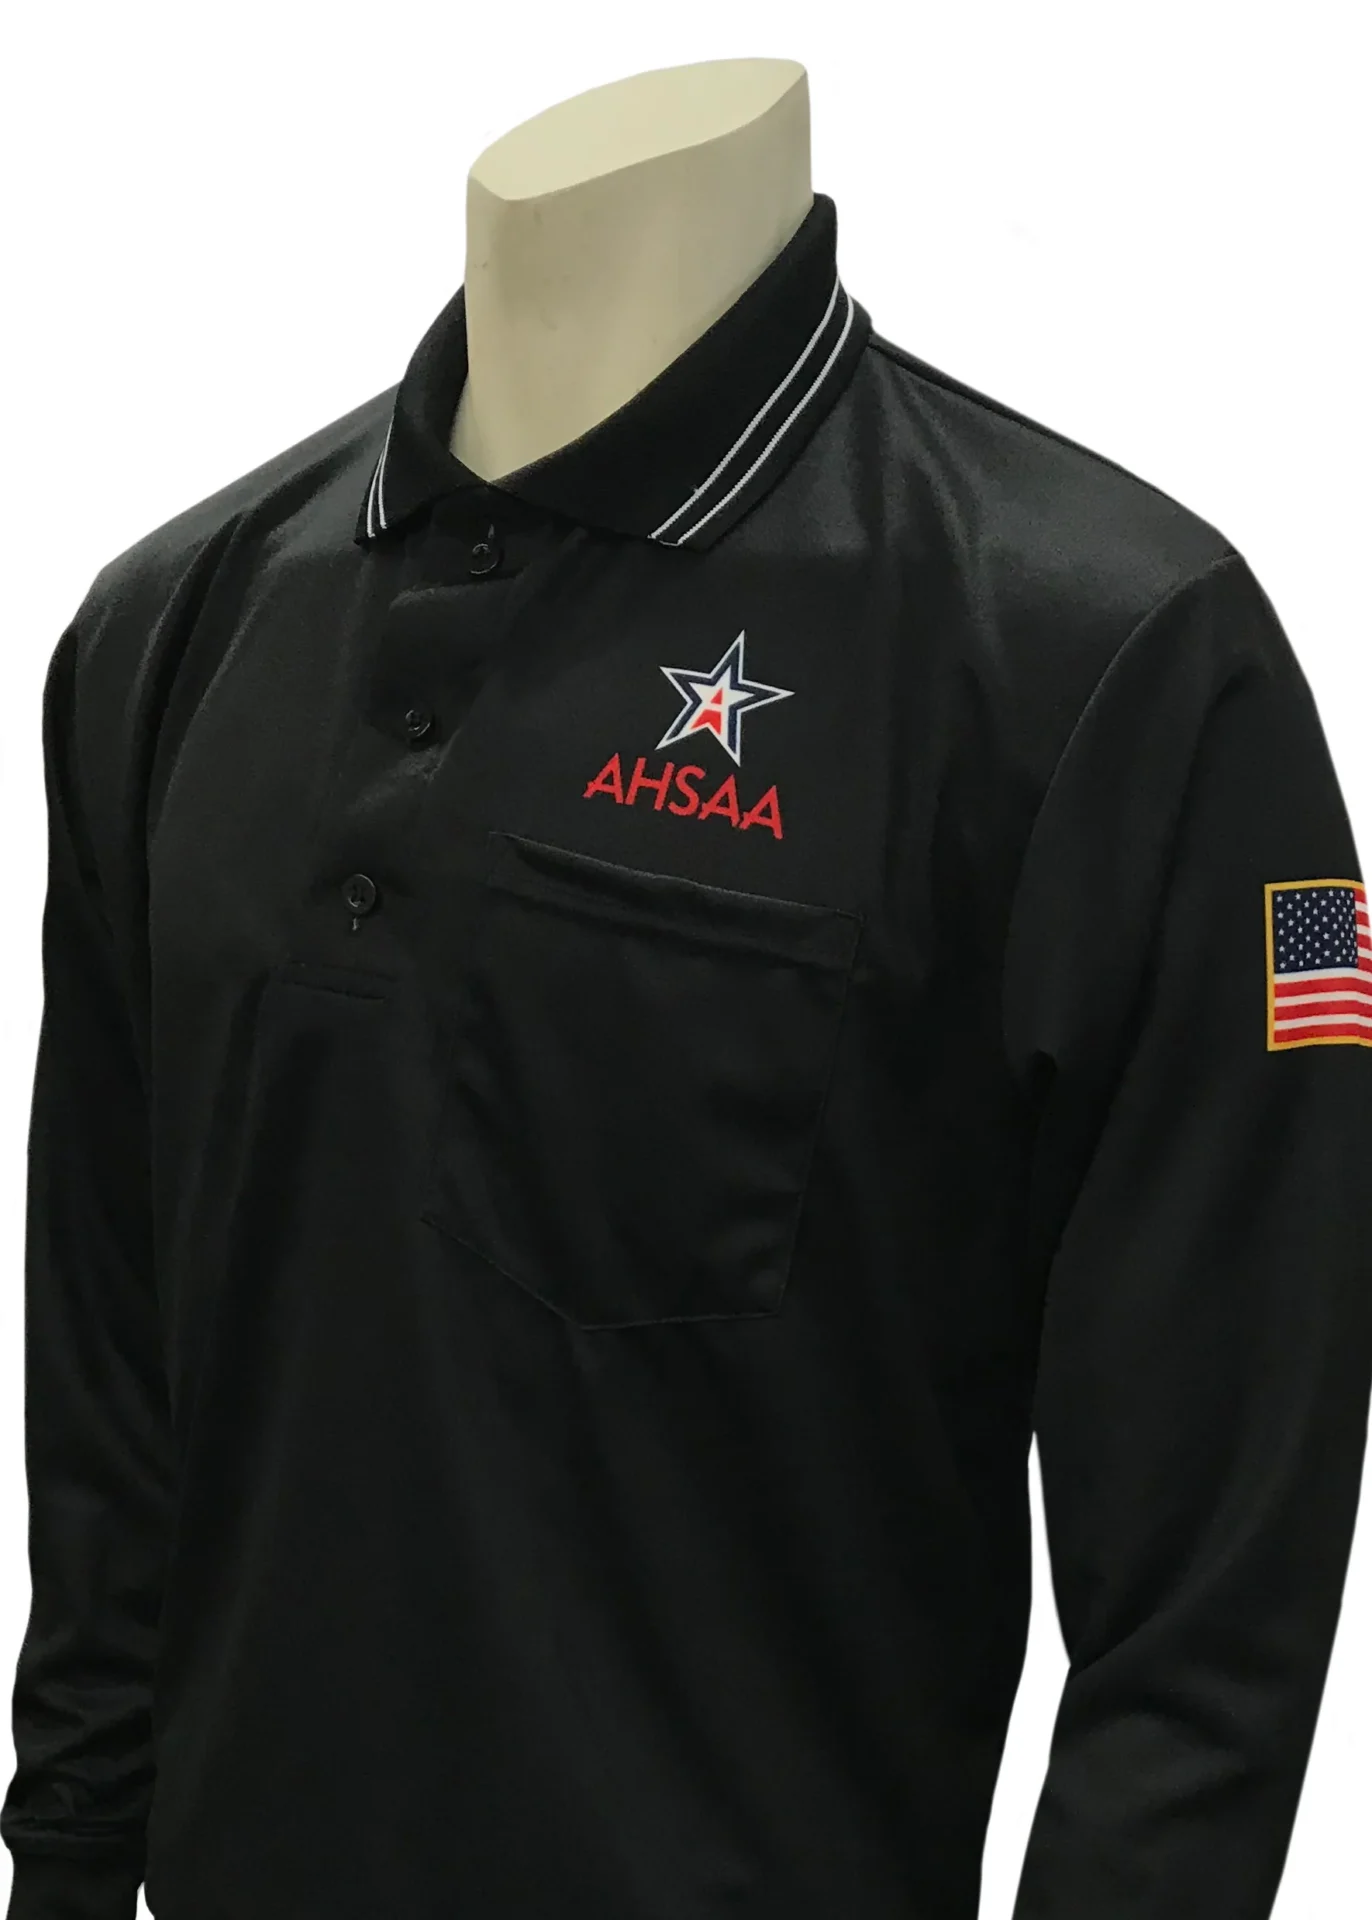 USA301 AL Ump Long Sleeve Shirt, New Logo Above Pocket Black